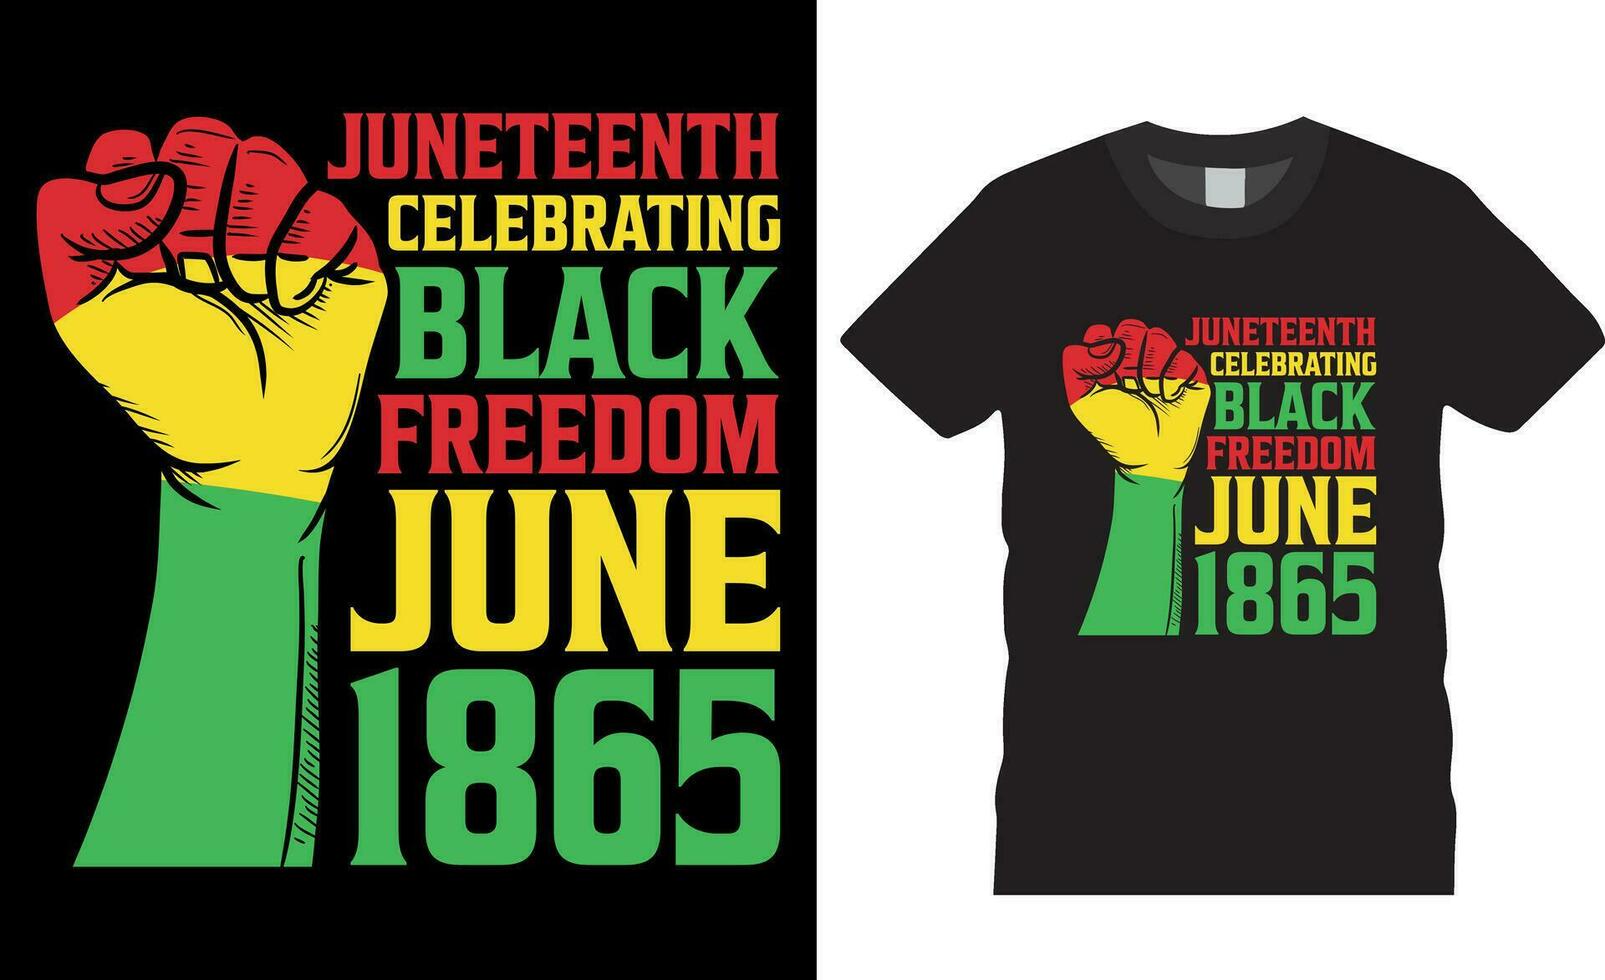 juni fira svart frihet juni 19-1865 t-shirt design vektor illustration.